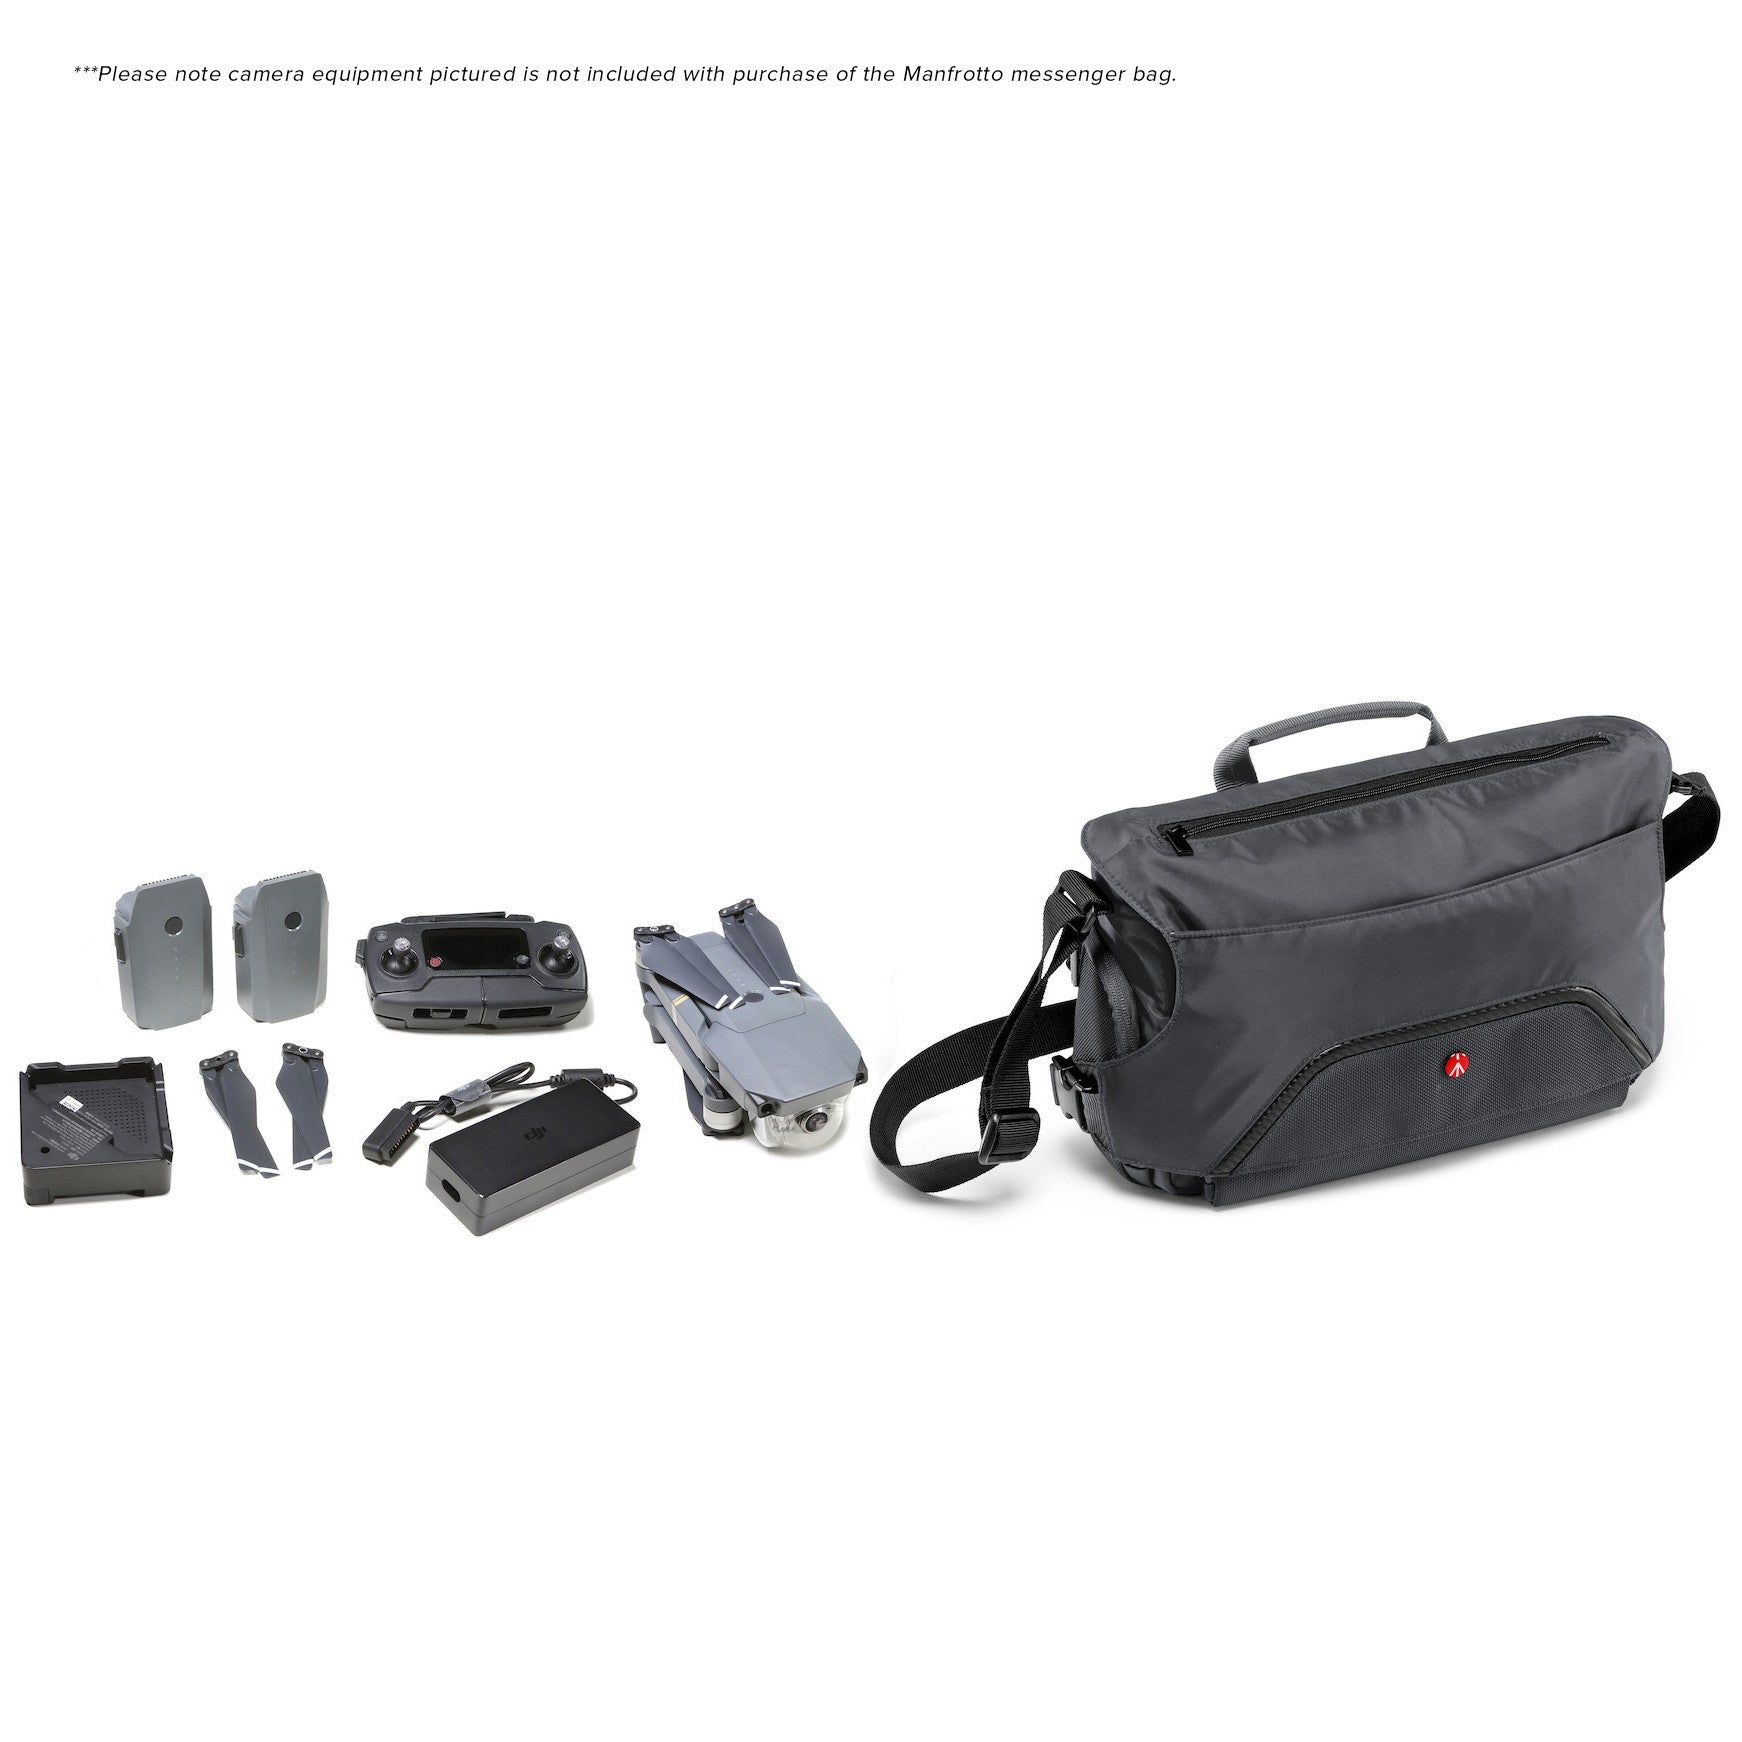 Manfrotto Small Advanced Pixi Messenger Bag (Grey)